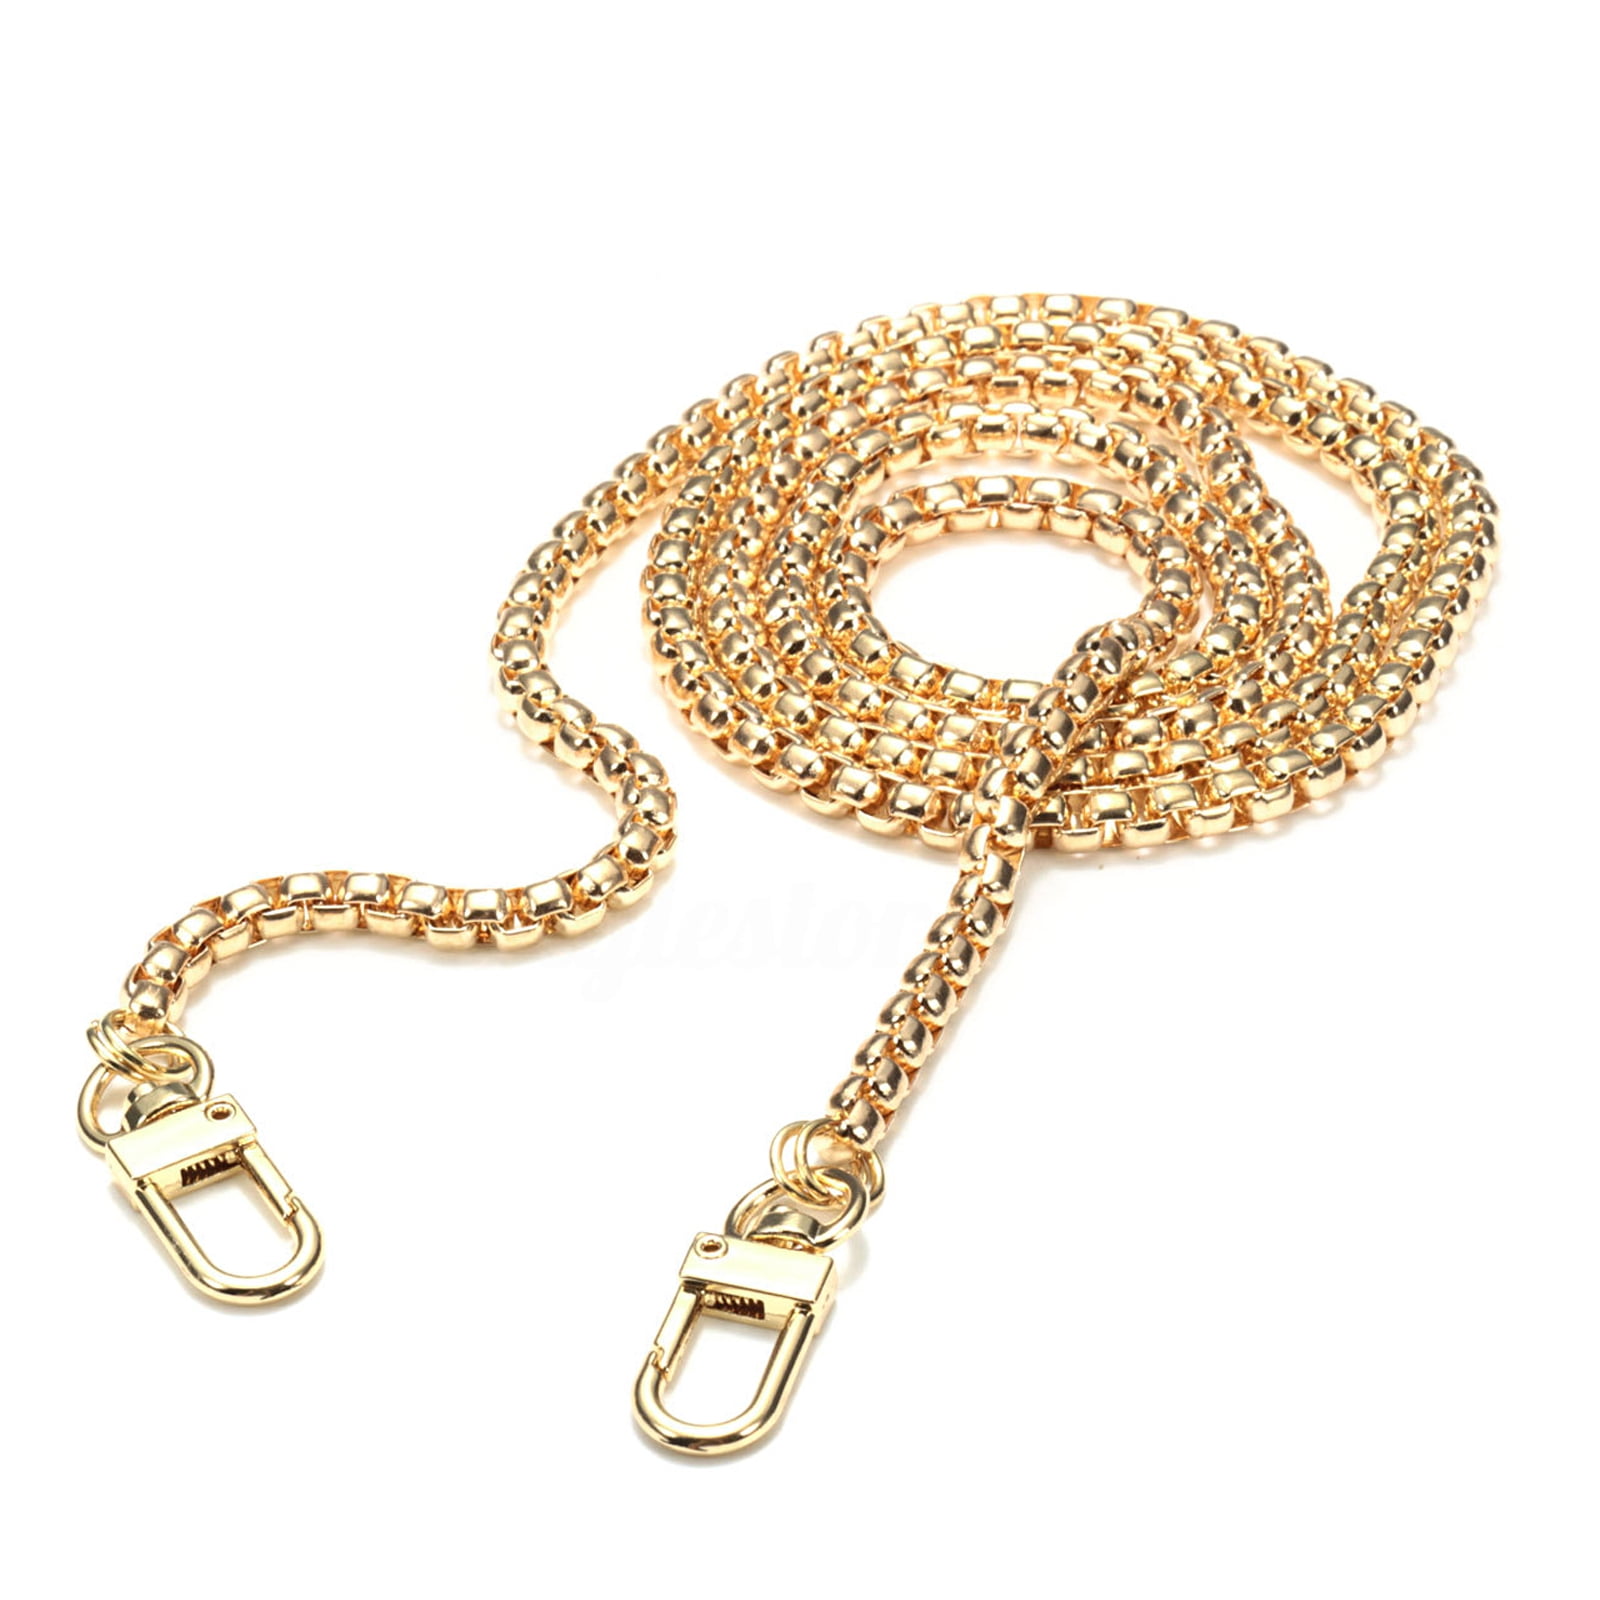 Chains DIY Gold Silver Gun bag strap Replacement Purse Chain Shoulder Bag Strap